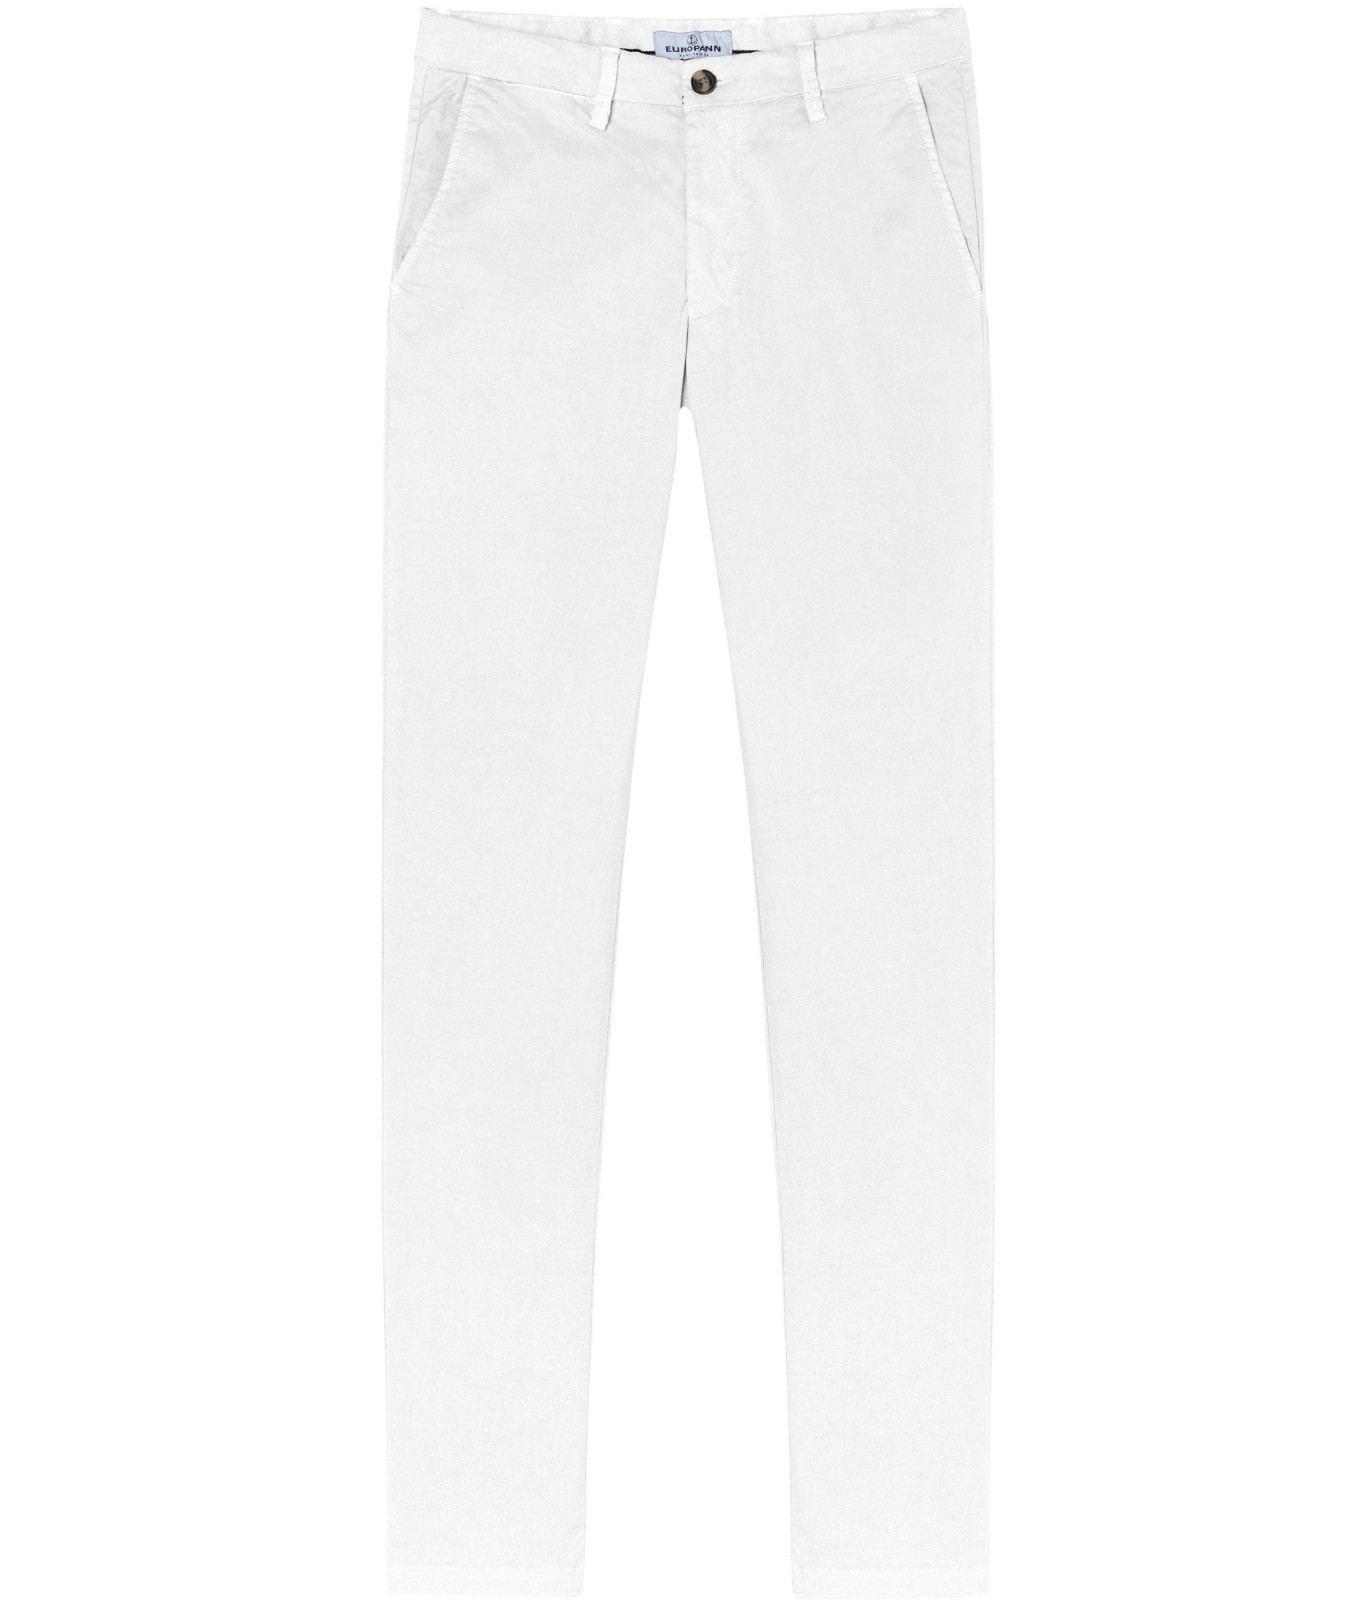 white slim trousers